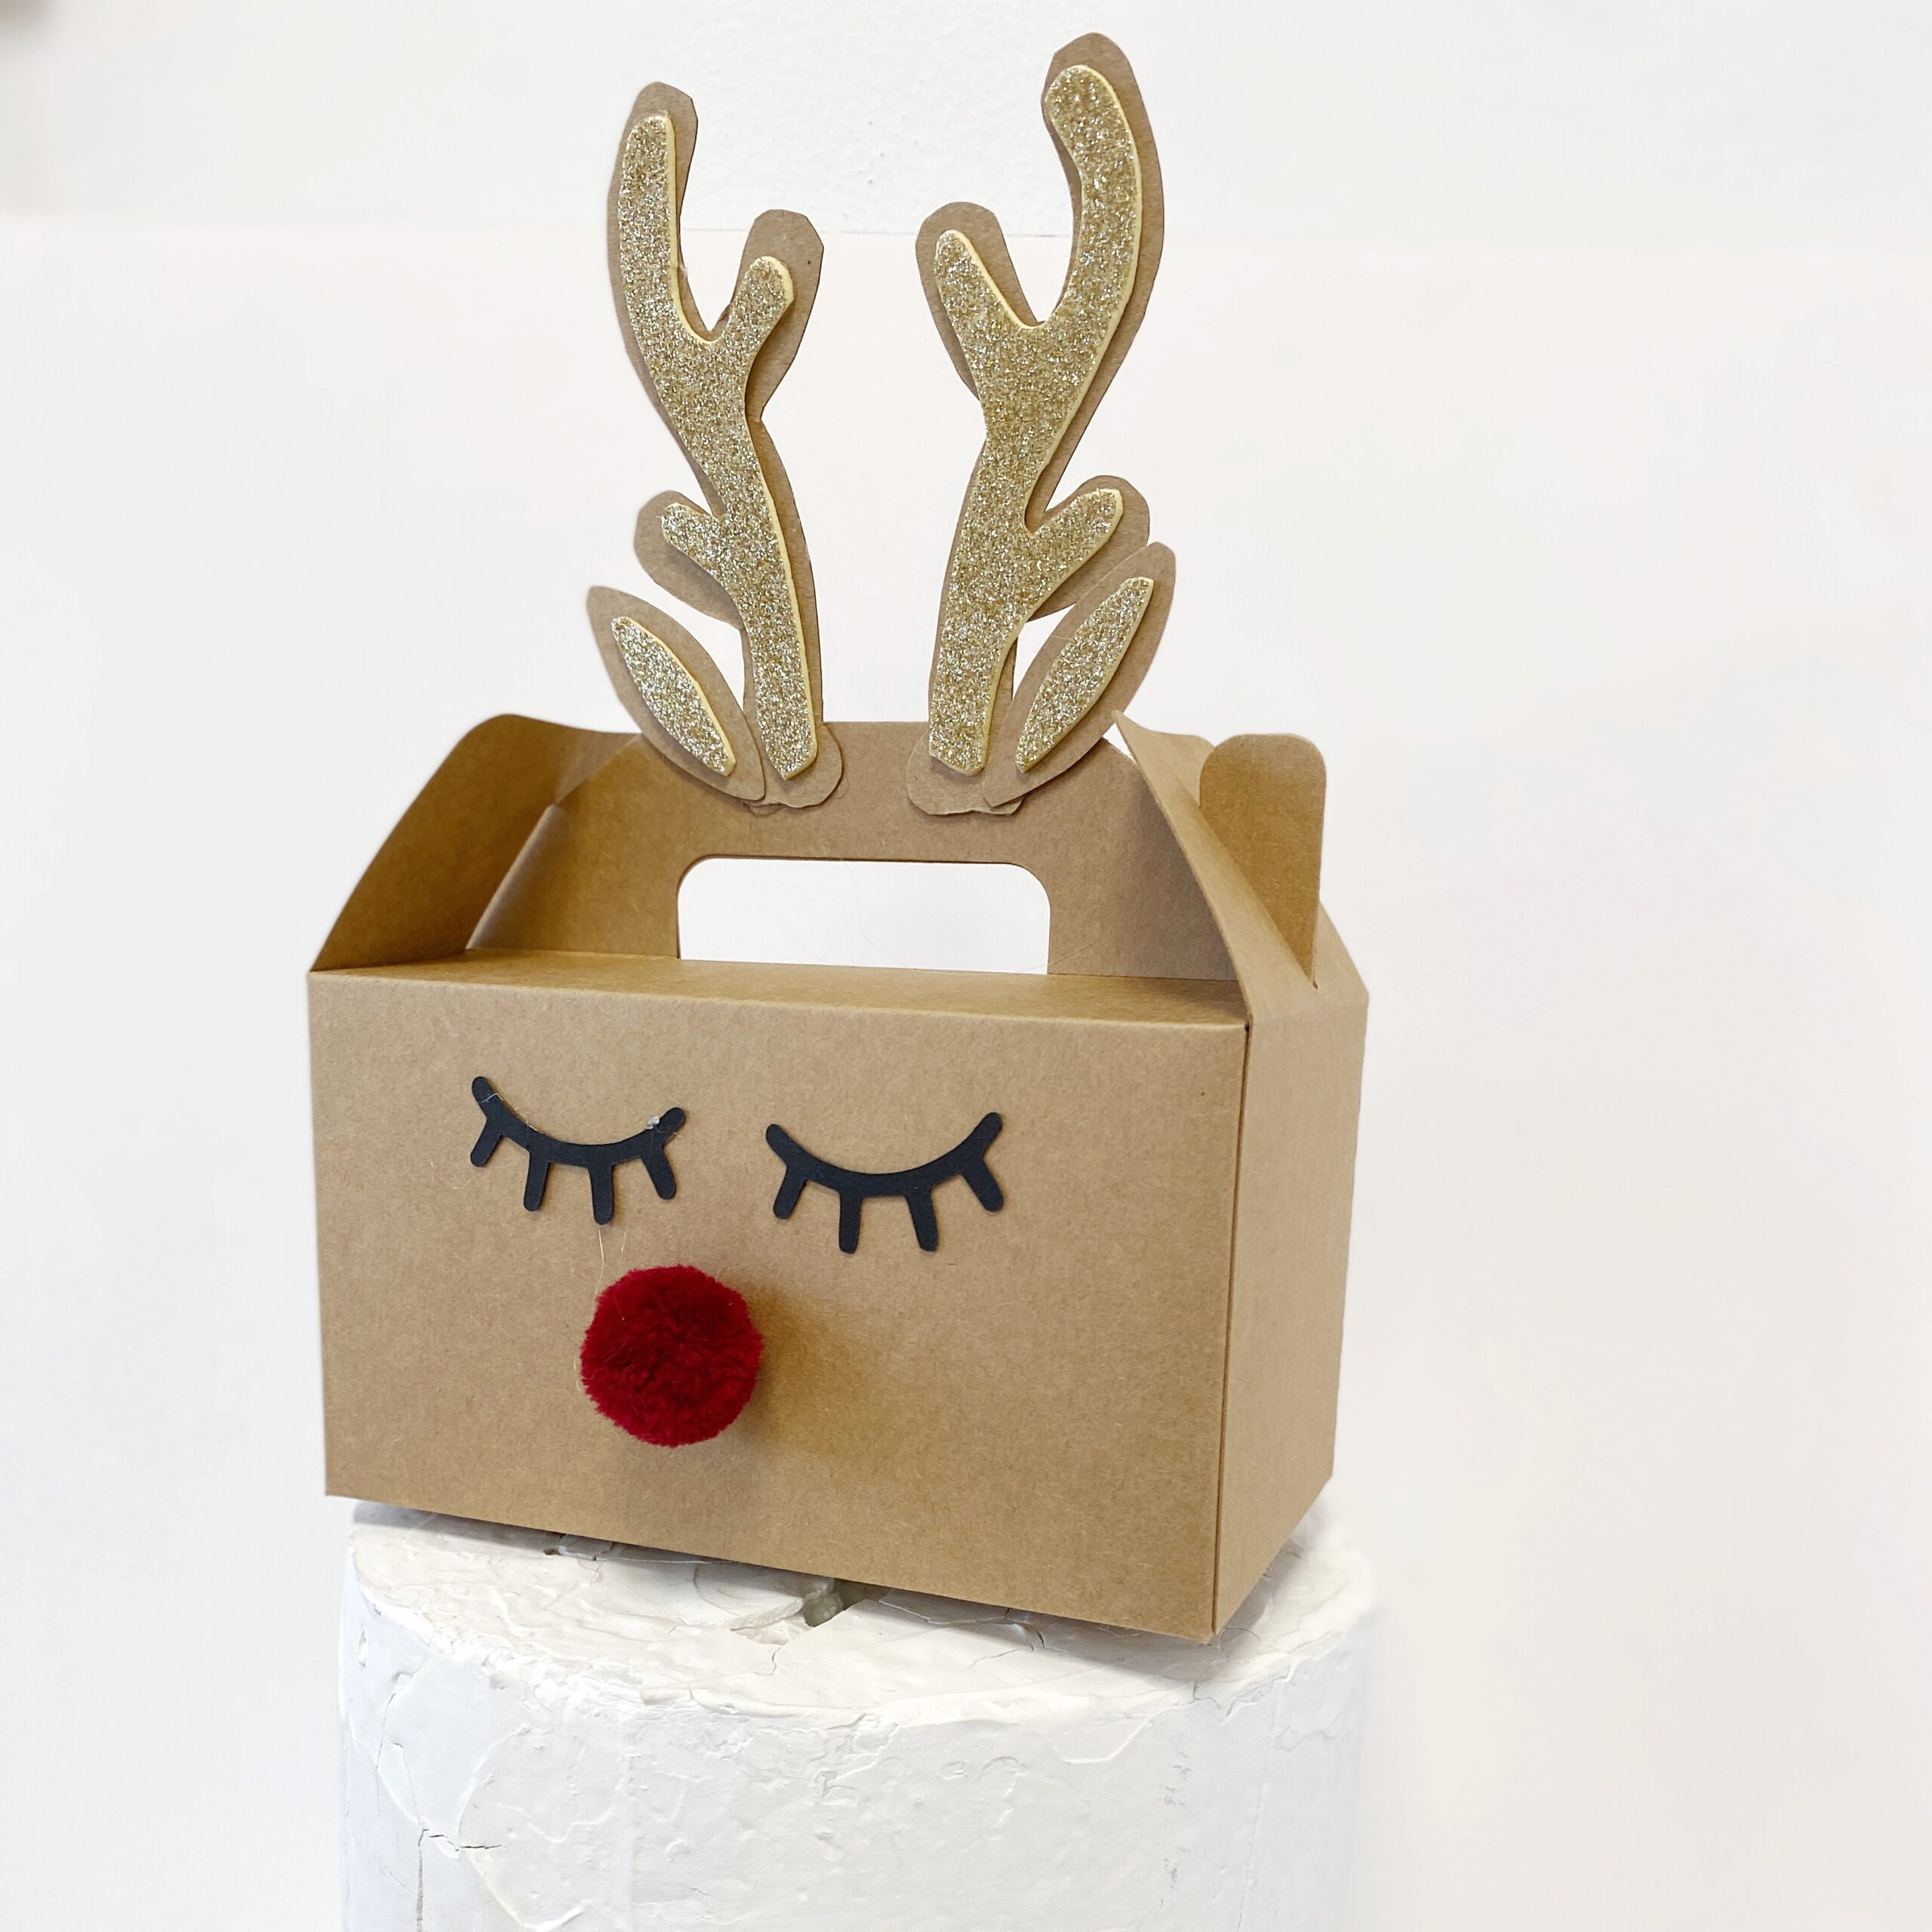 Caja picnic craft, caja para kit regalos craft kraft decorada